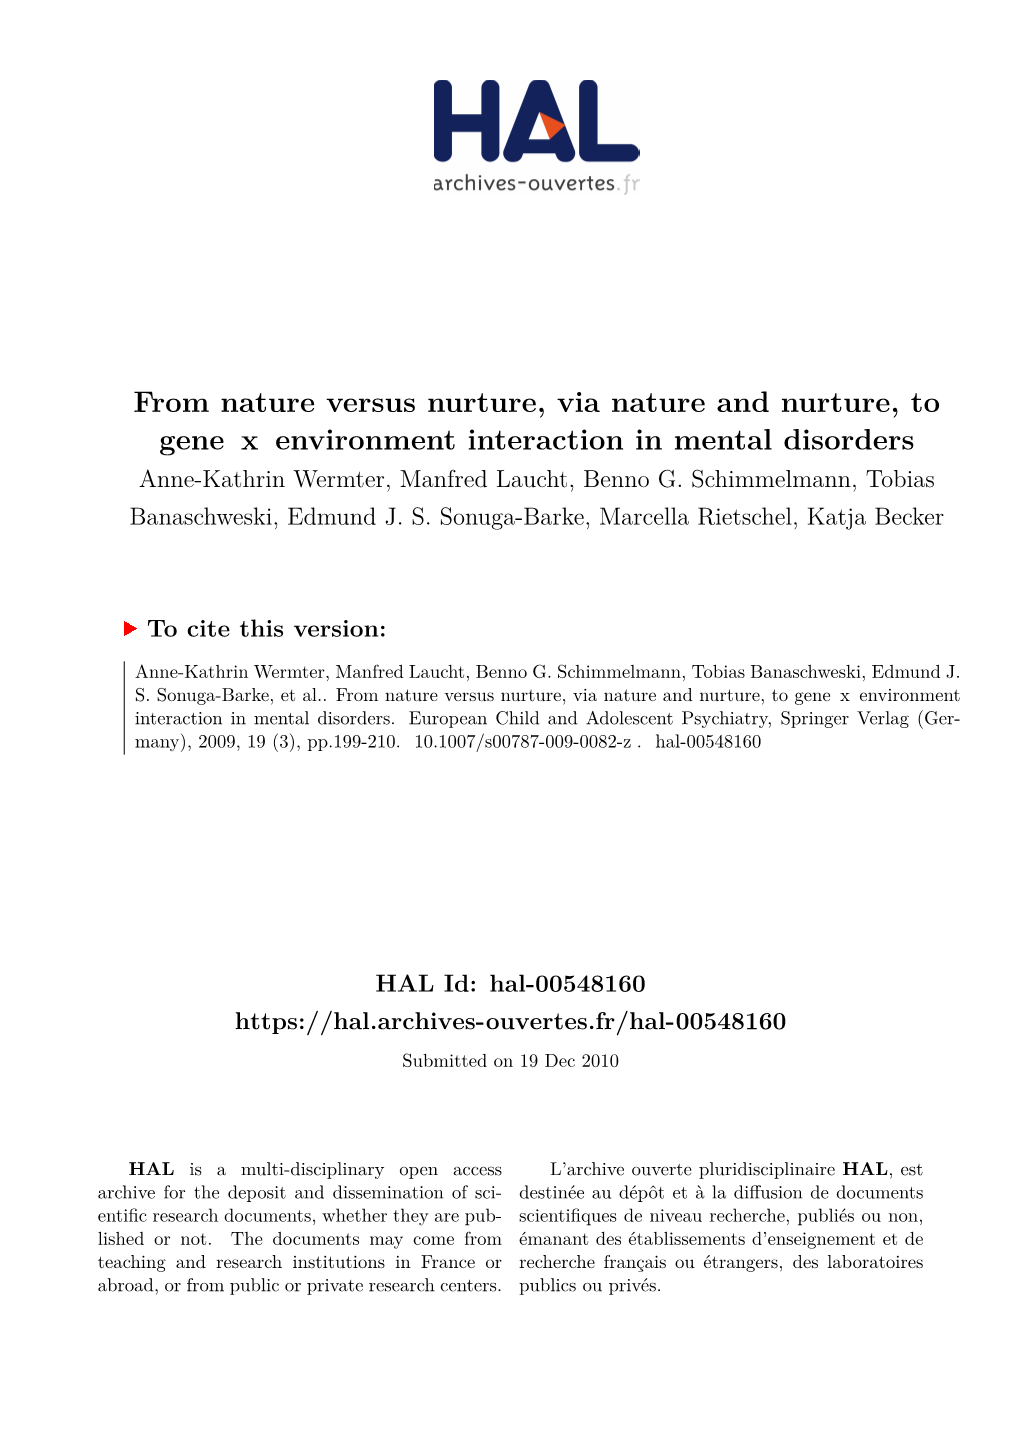 From Nature Versus Nurture, Via Nature and Nurture, to Gene X Environment Interaction in Mental Disorders Anne-Kathrin Wermter, Manfred Laucht, Benno G